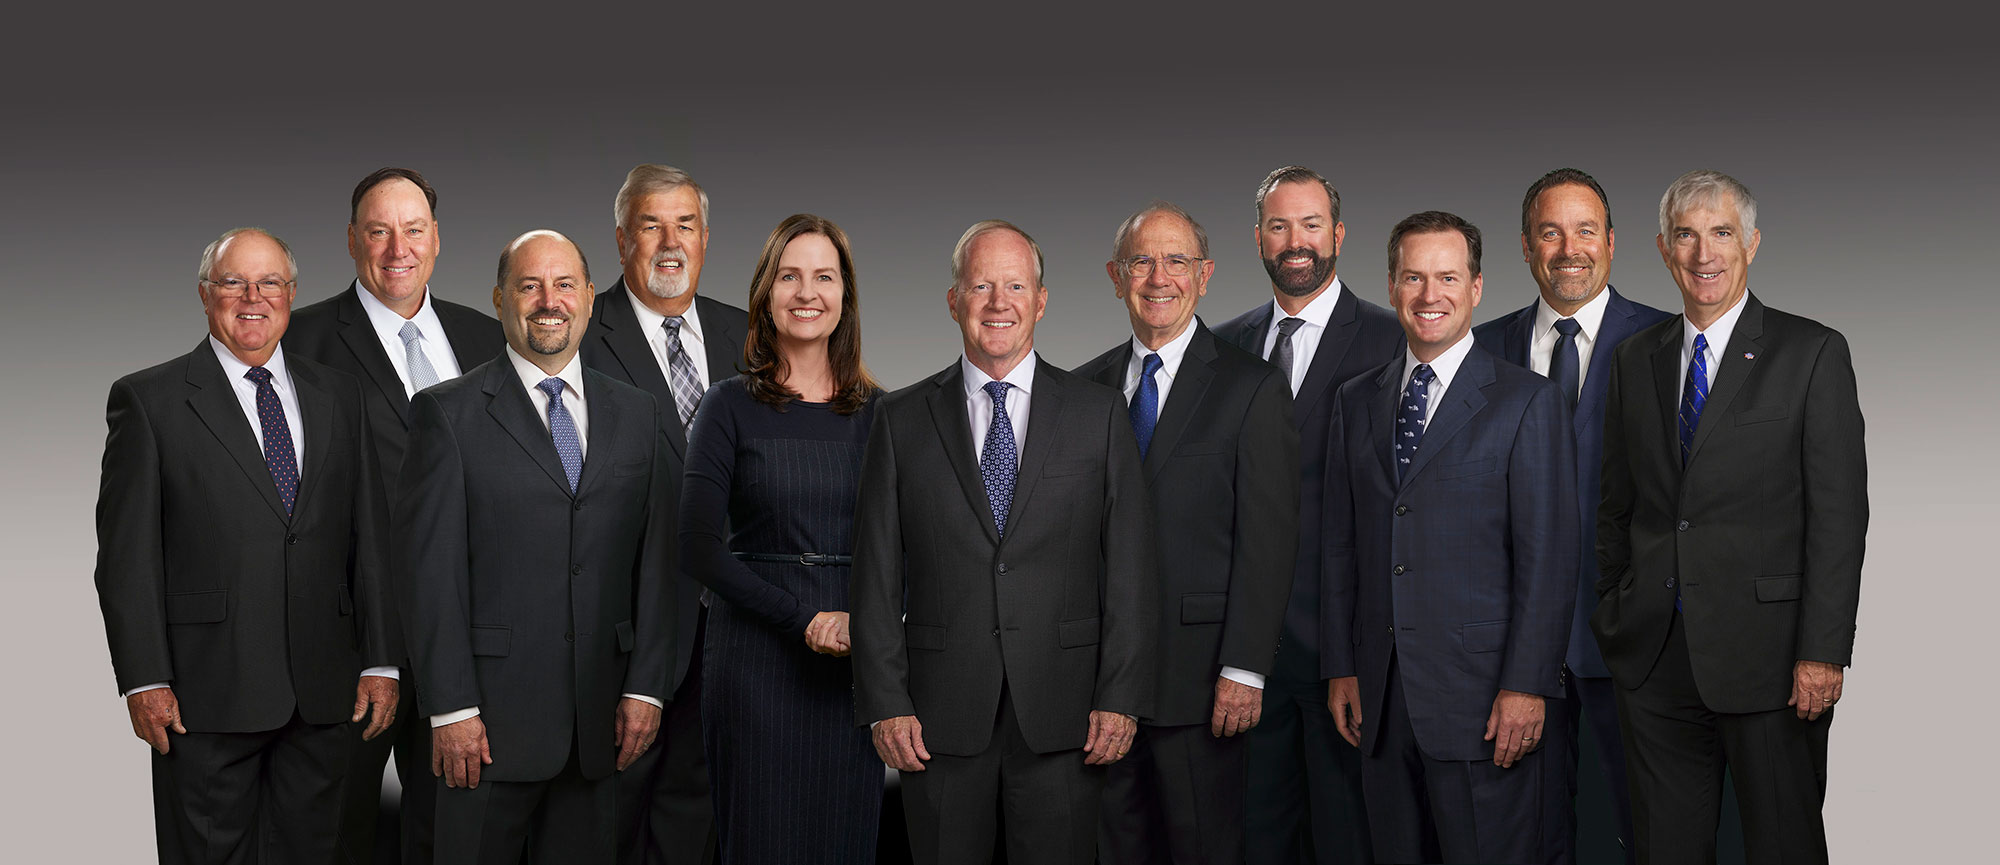 2022 Board of Directors group shot